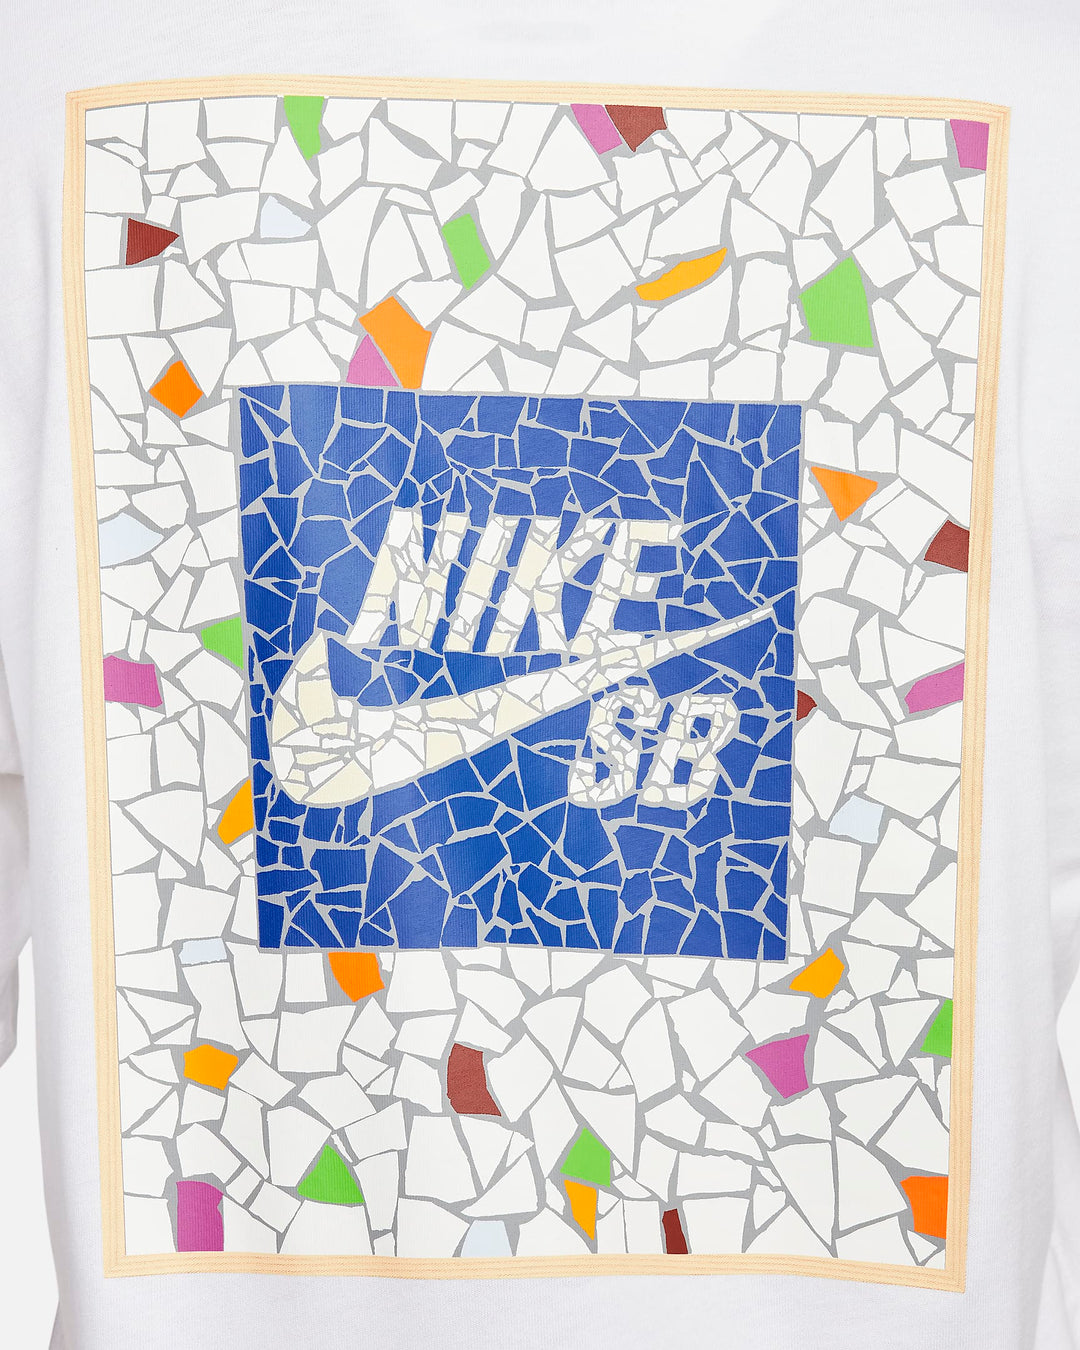 Nike SB Skate T-Shirt  - WHITE - Sun Diego Boardshop